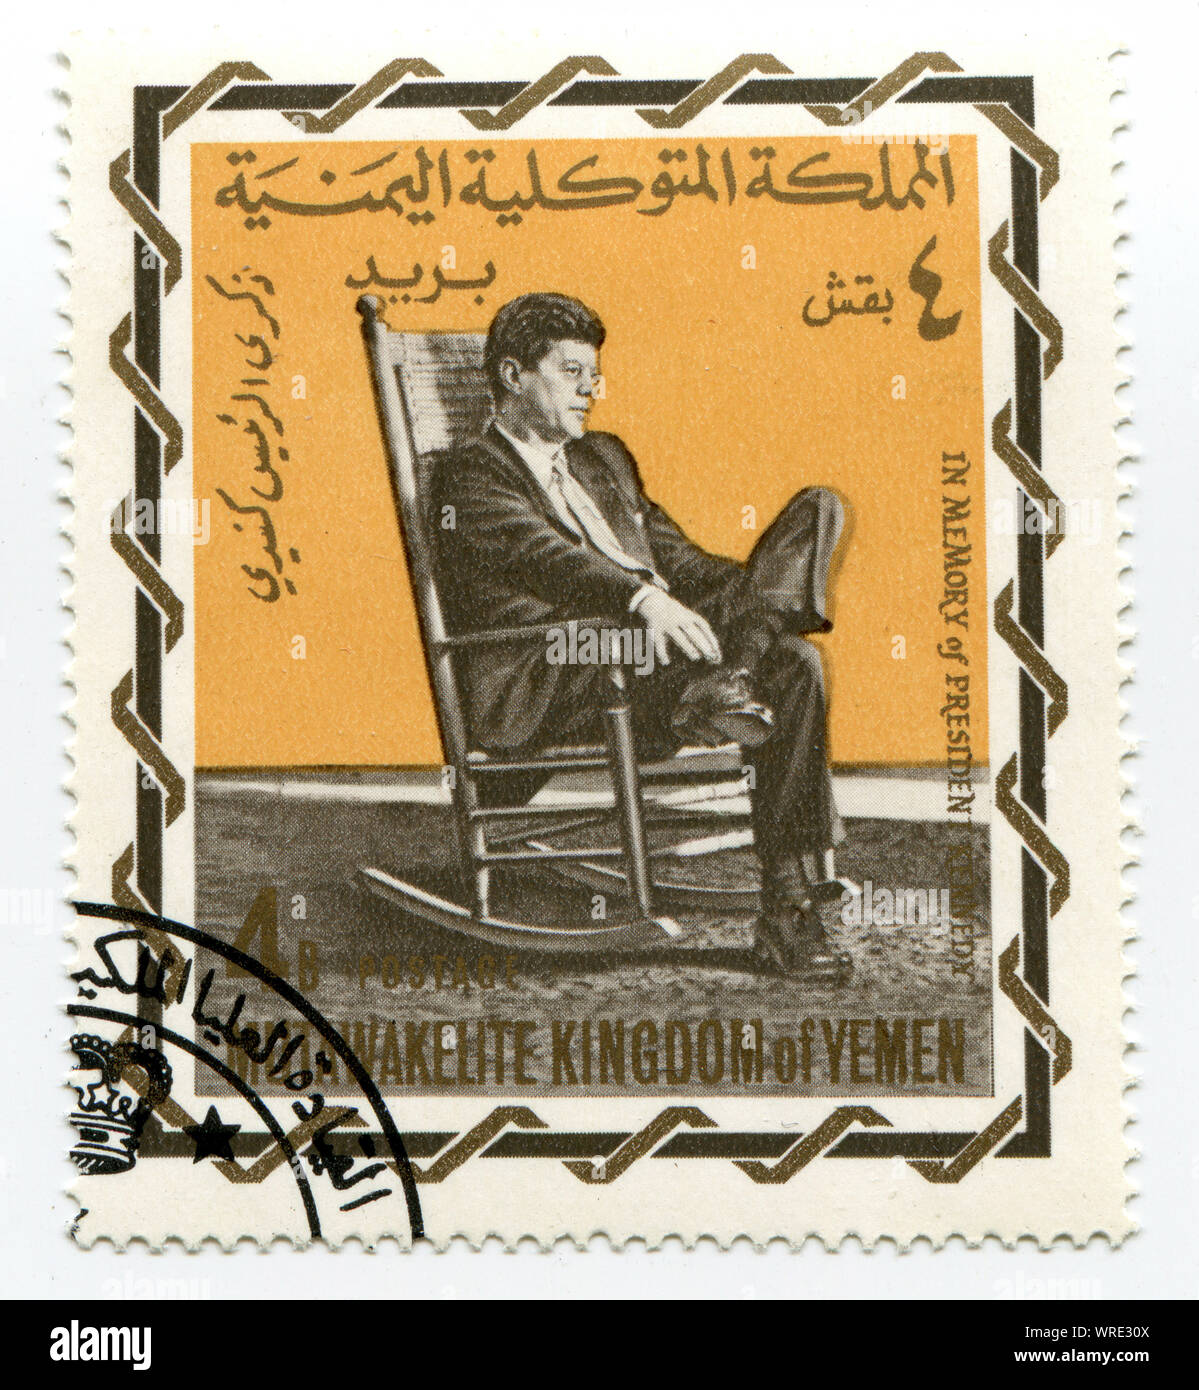 John Fitzgerald Kennedy on Yemen postage stamp Stock Photo